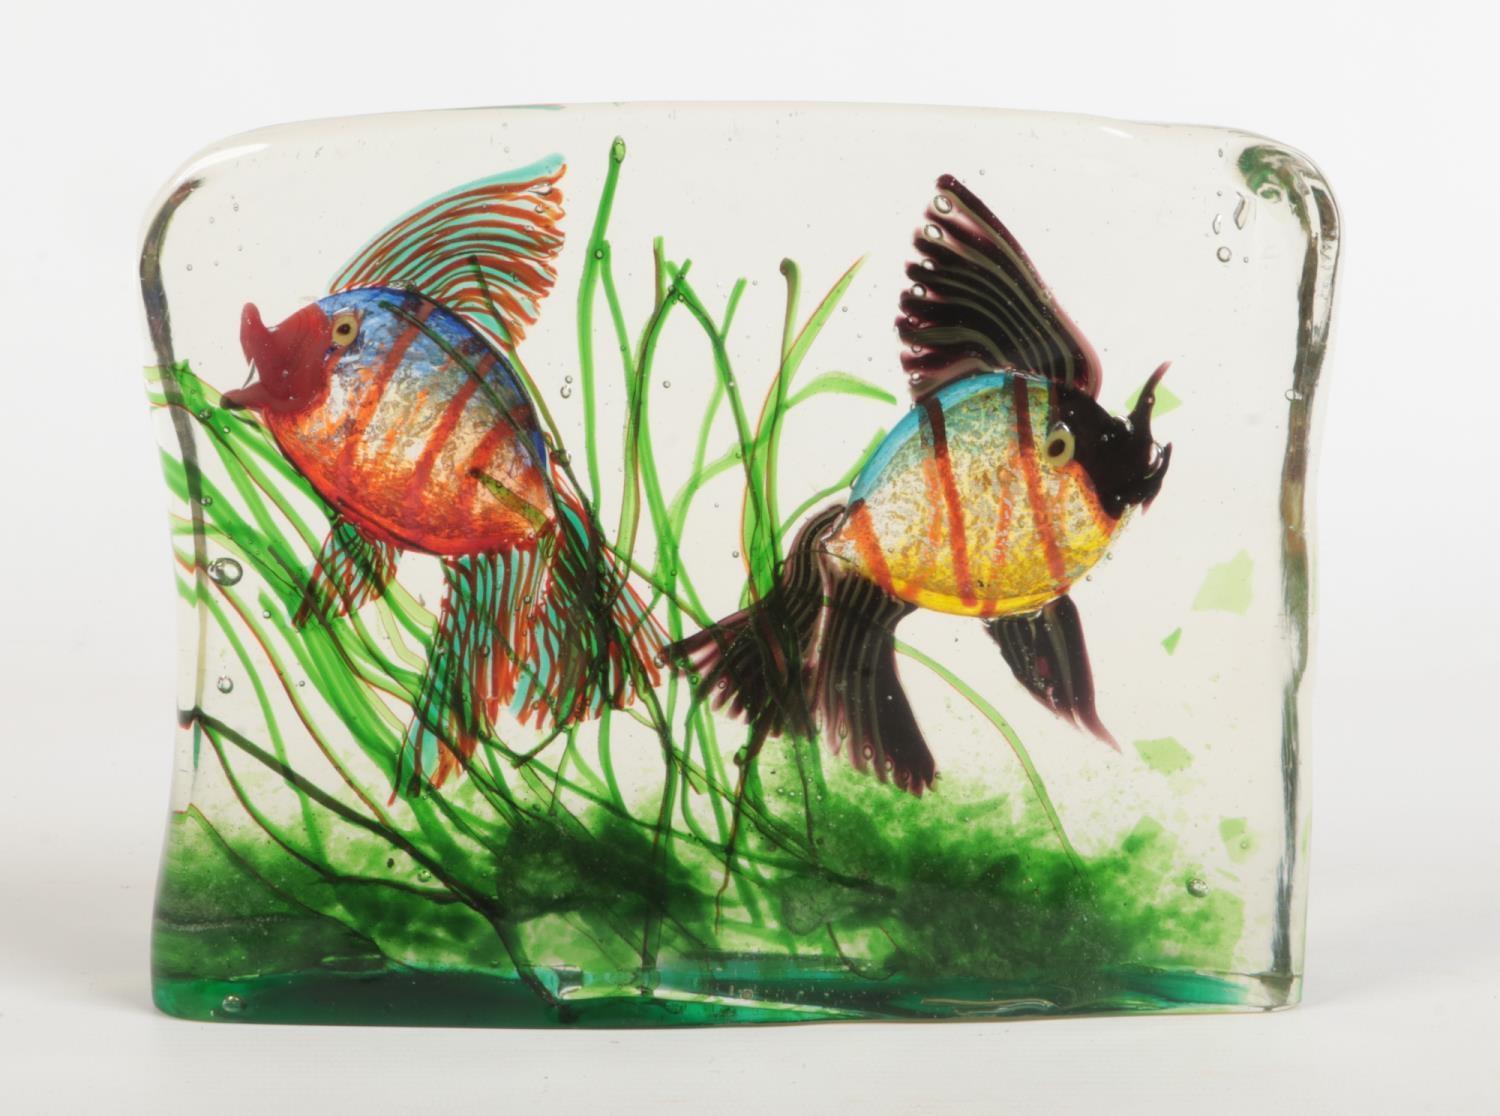 A vintage Murano glass aquarium block. Encasing a pair of colourful angel fish amidst aquatic weeds, - Image 3 of 3